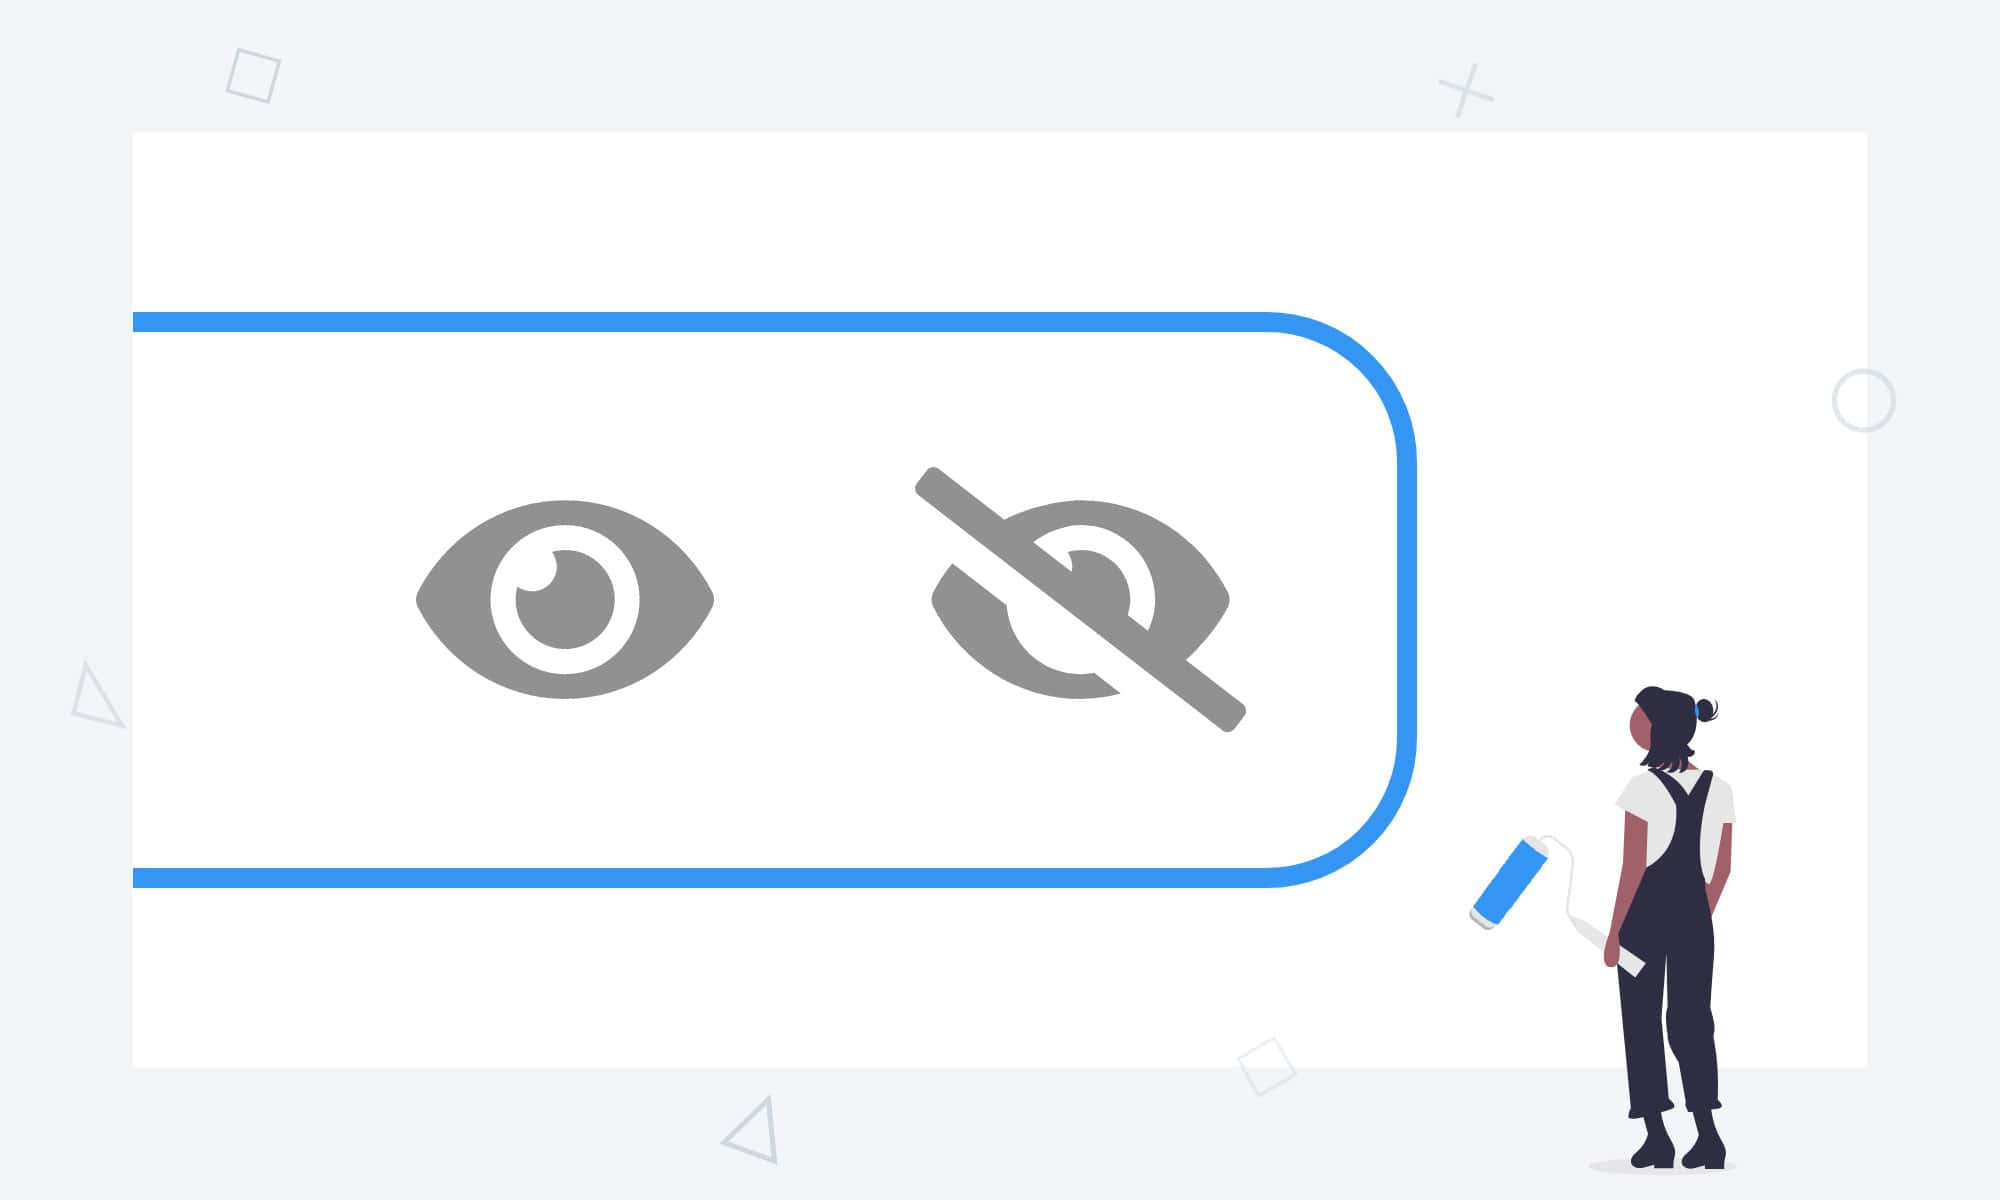 The password-eye icon nightmare